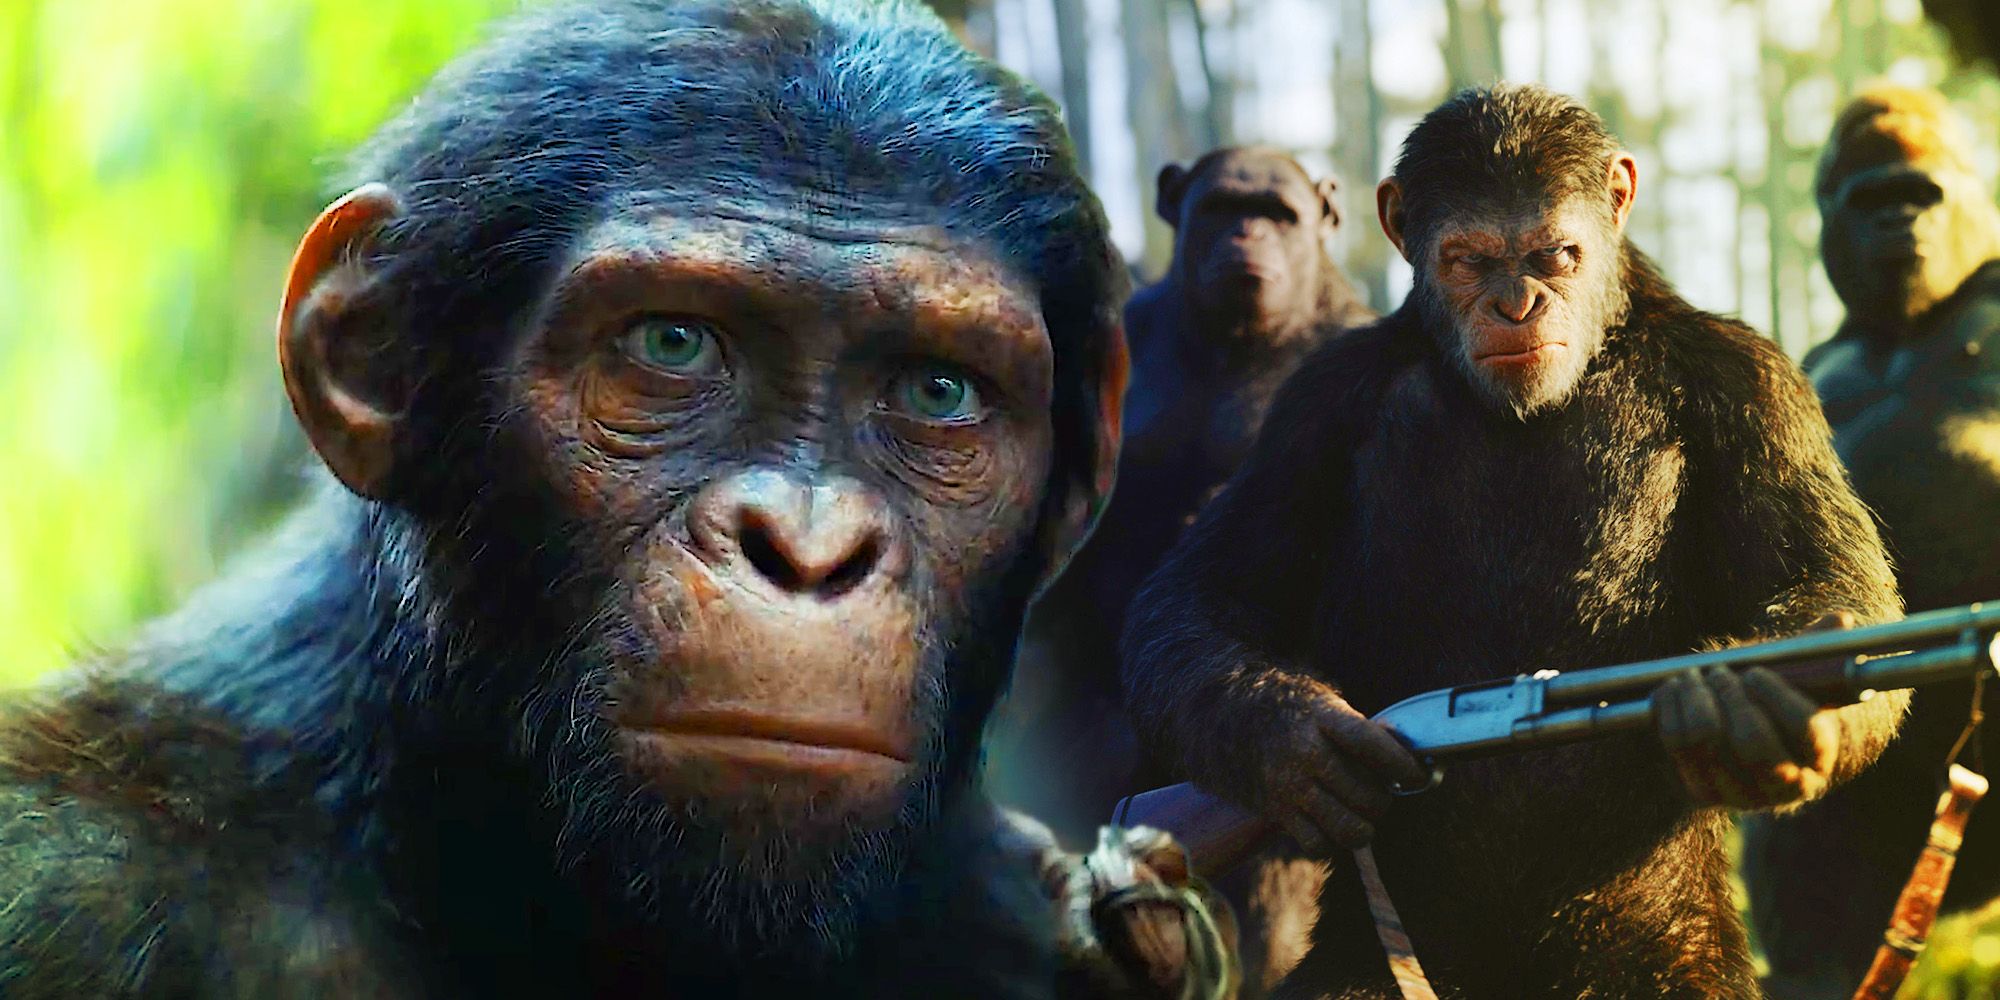 when-kingdom-planet-apes-set-previous-movies-franchise